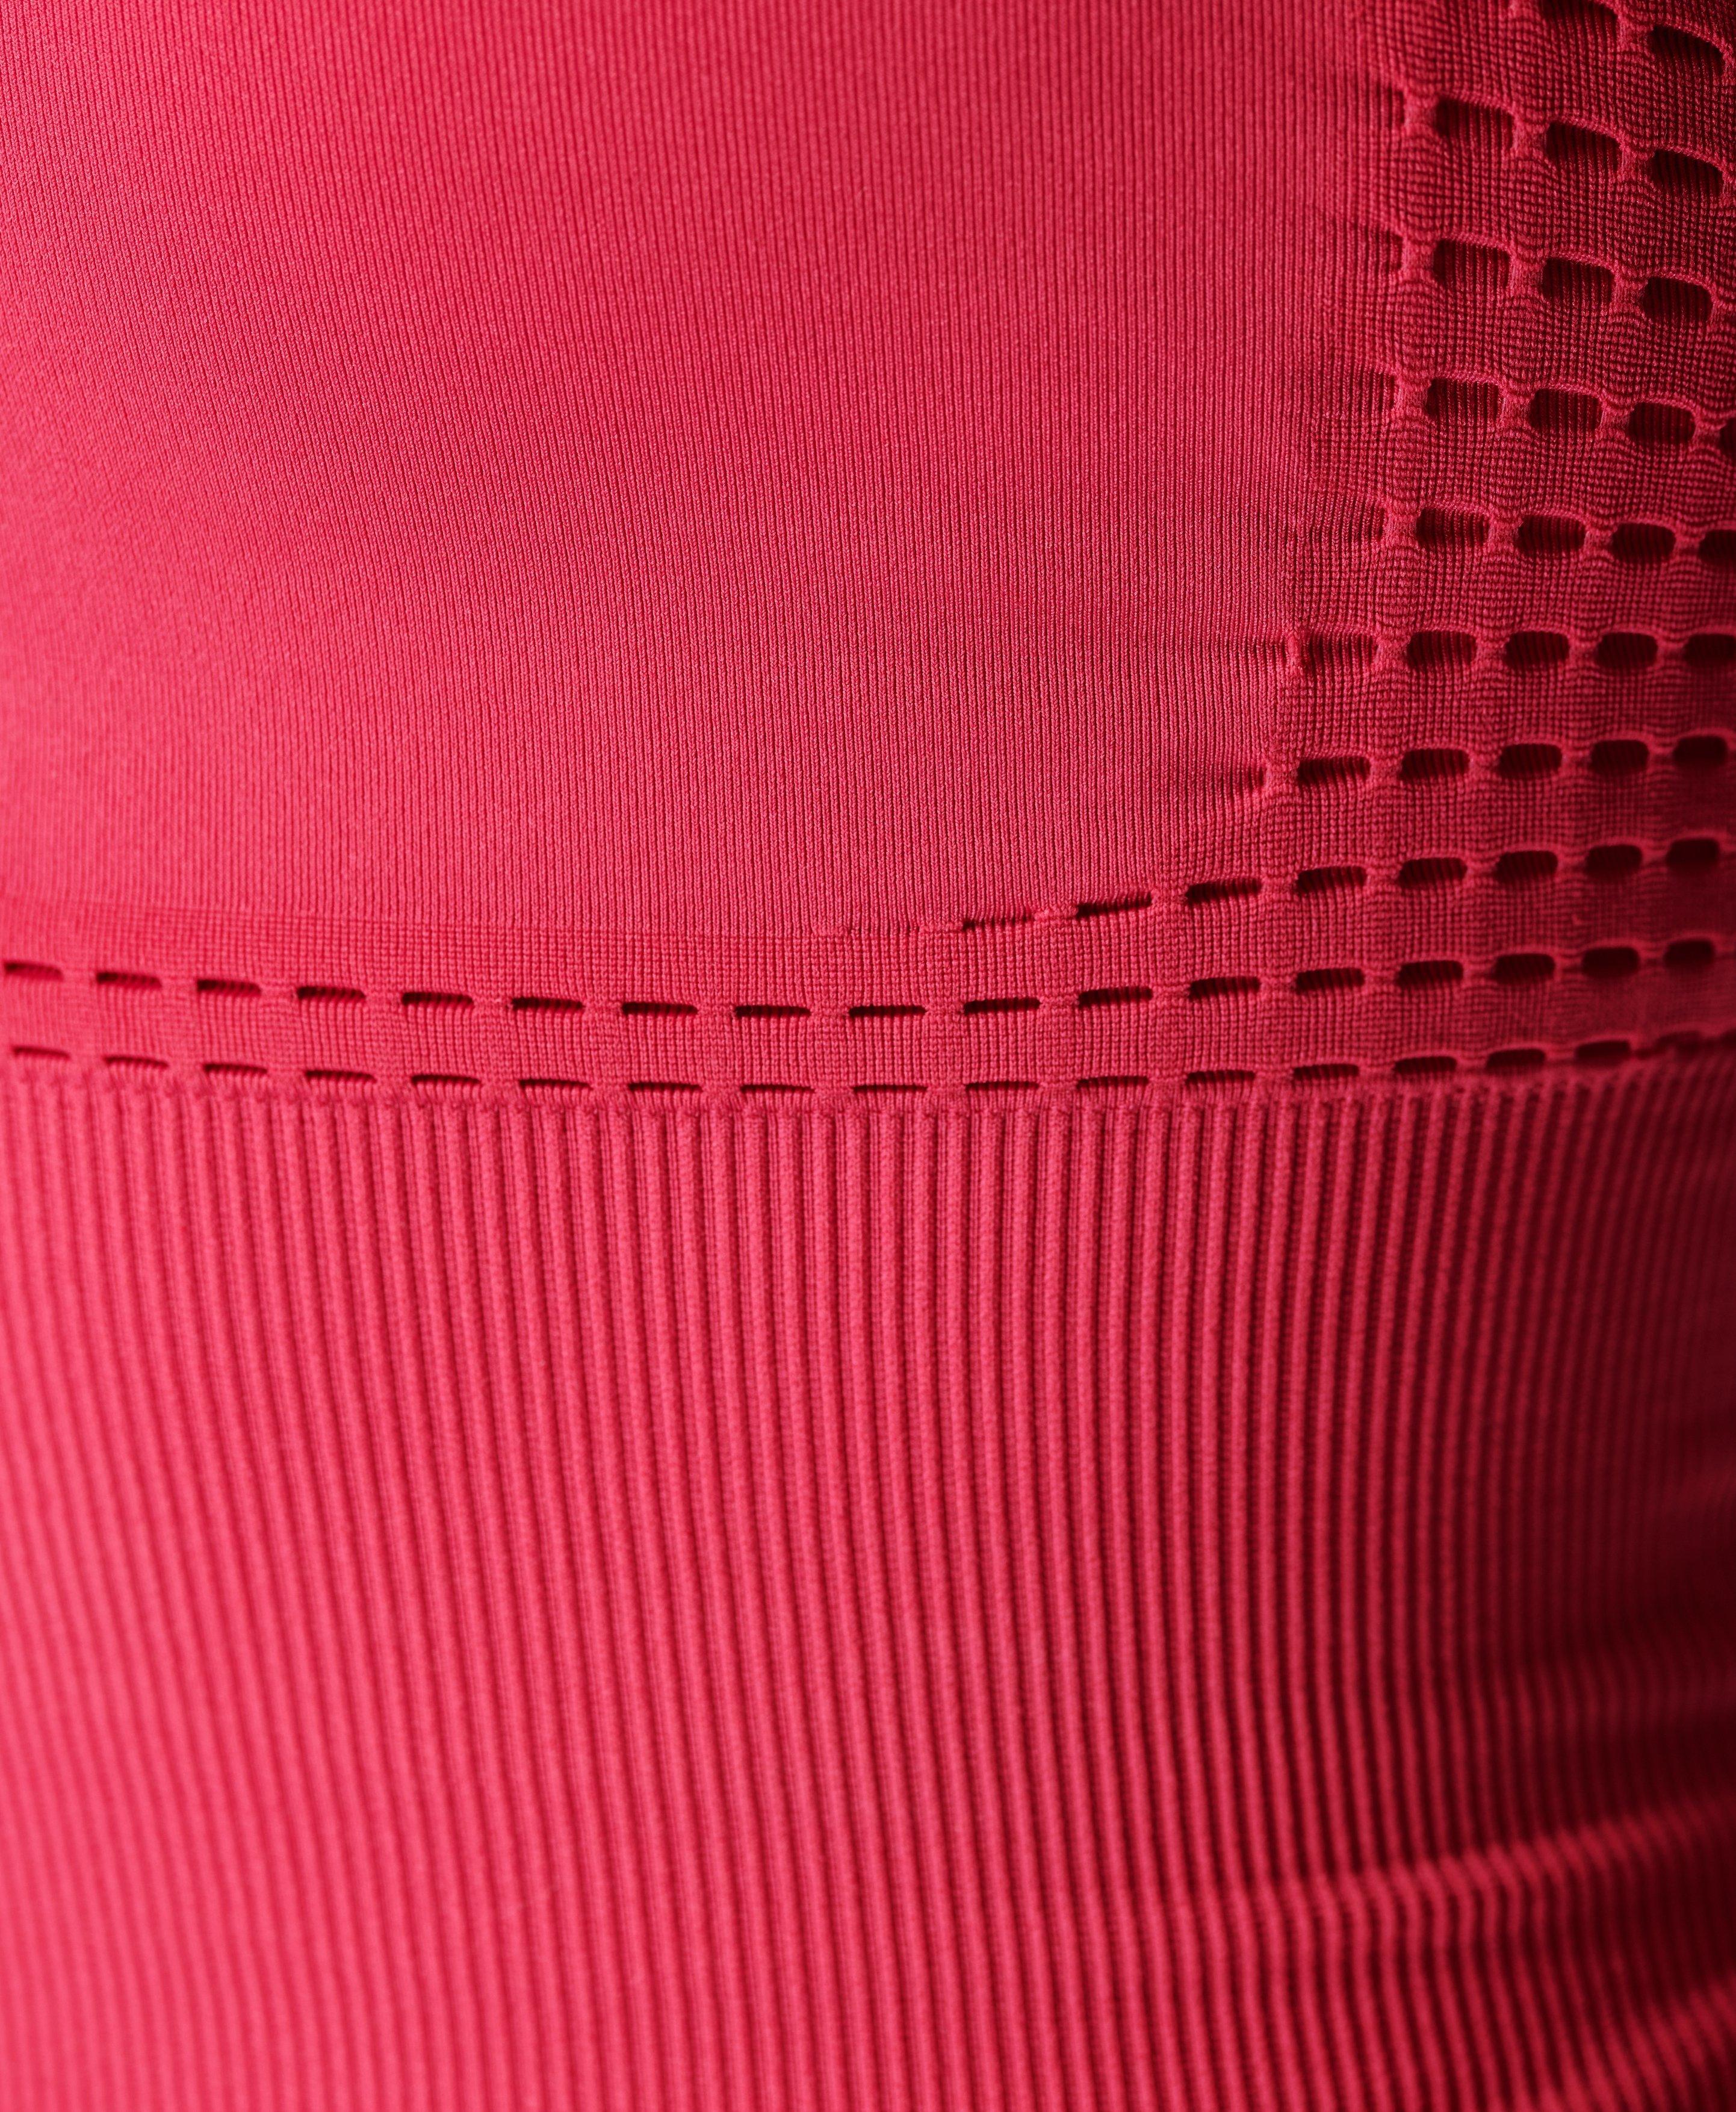 Sweaty Betty, Intimates & Sleepwear, Sweaty Betty Stamina Longline Sports  Bra In Blush Pink Size Medium